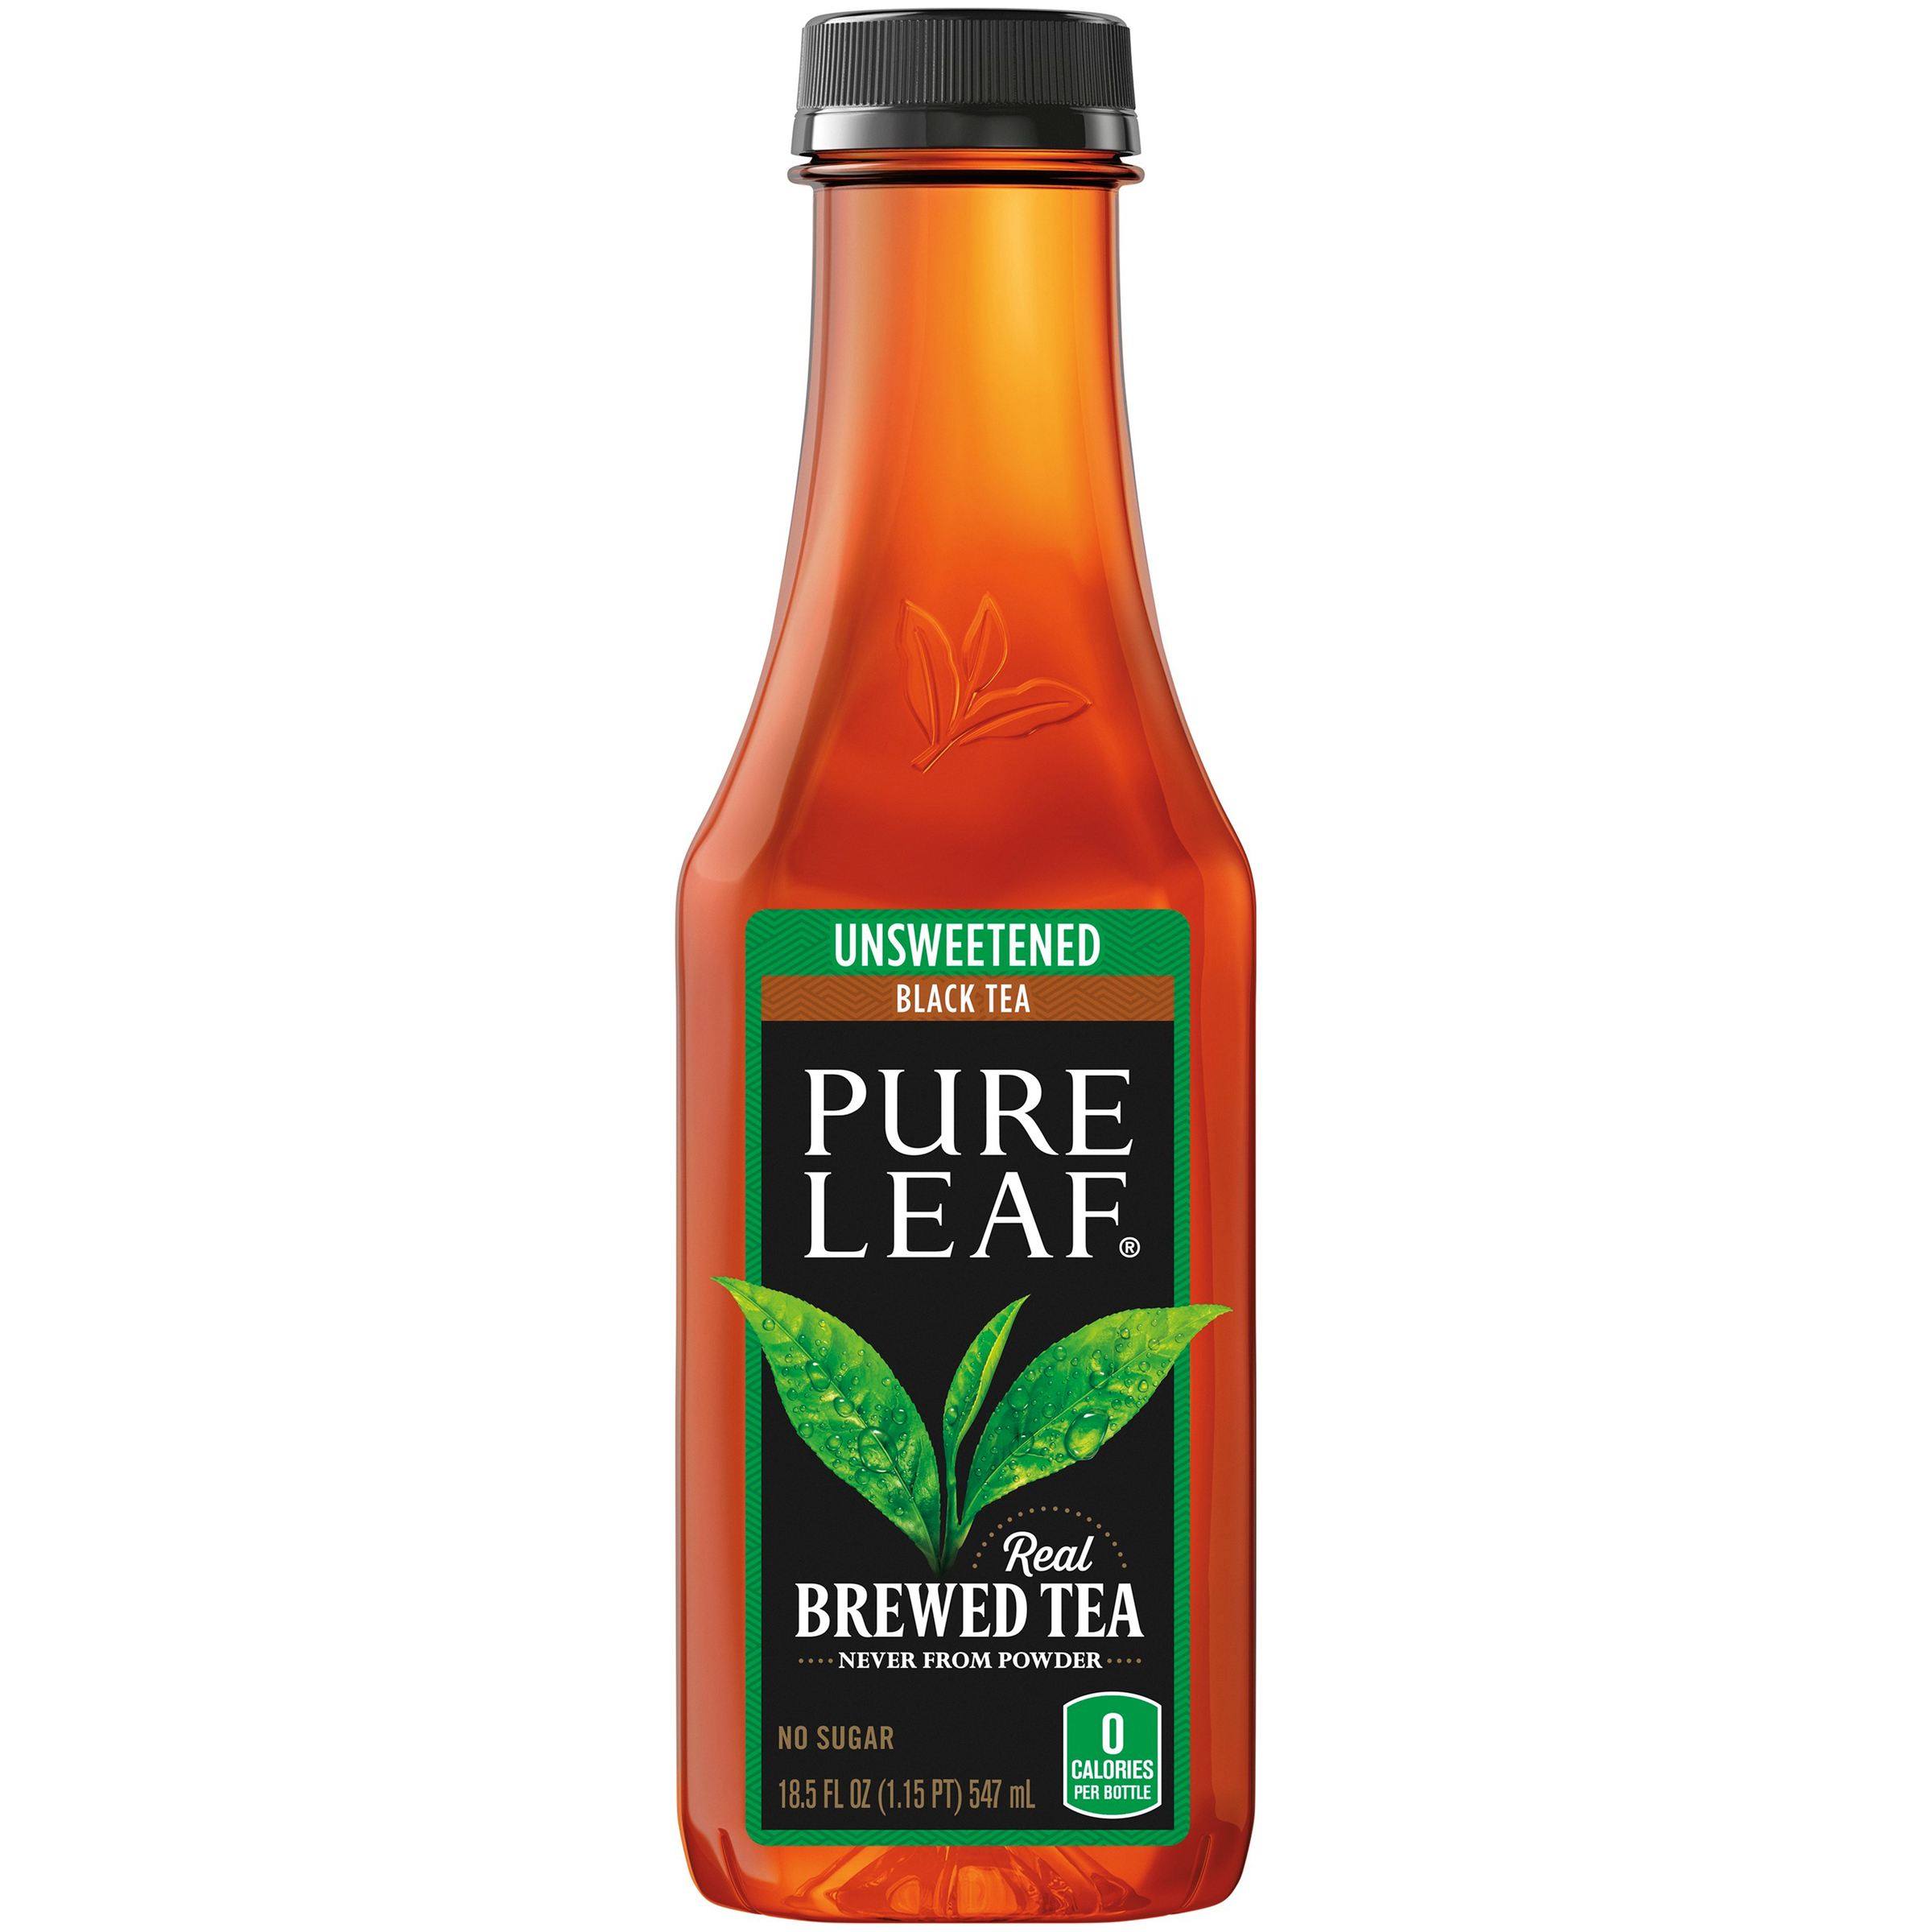 Pure Leaf Real Brewed Tea Unsweetened Black Tea Packaging Image